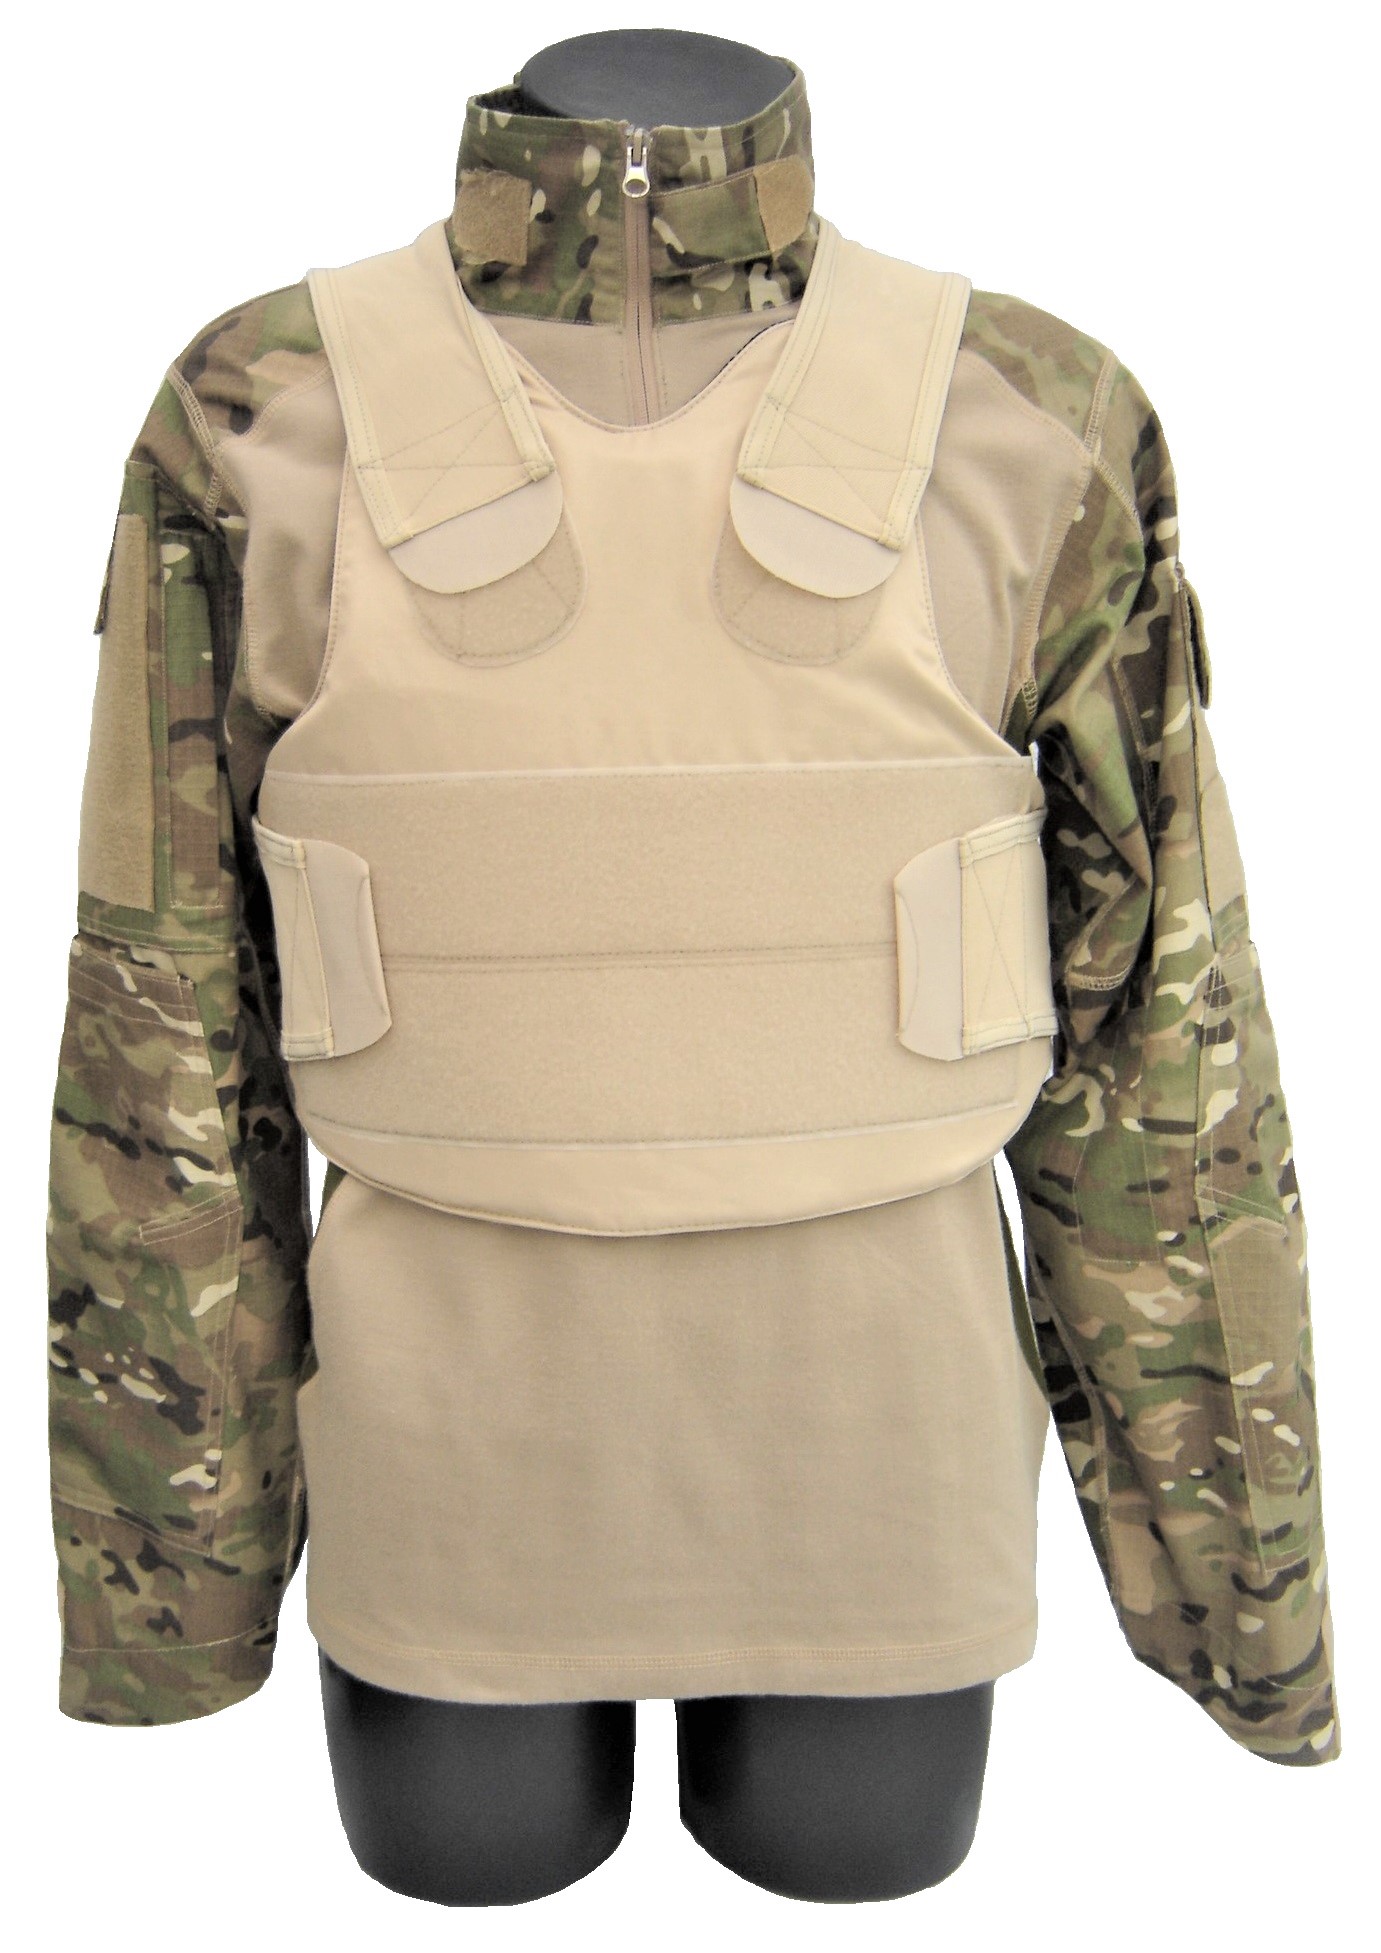 Bullet proof vest Pollux Skin Tone NIJ-3A (04) GRAN